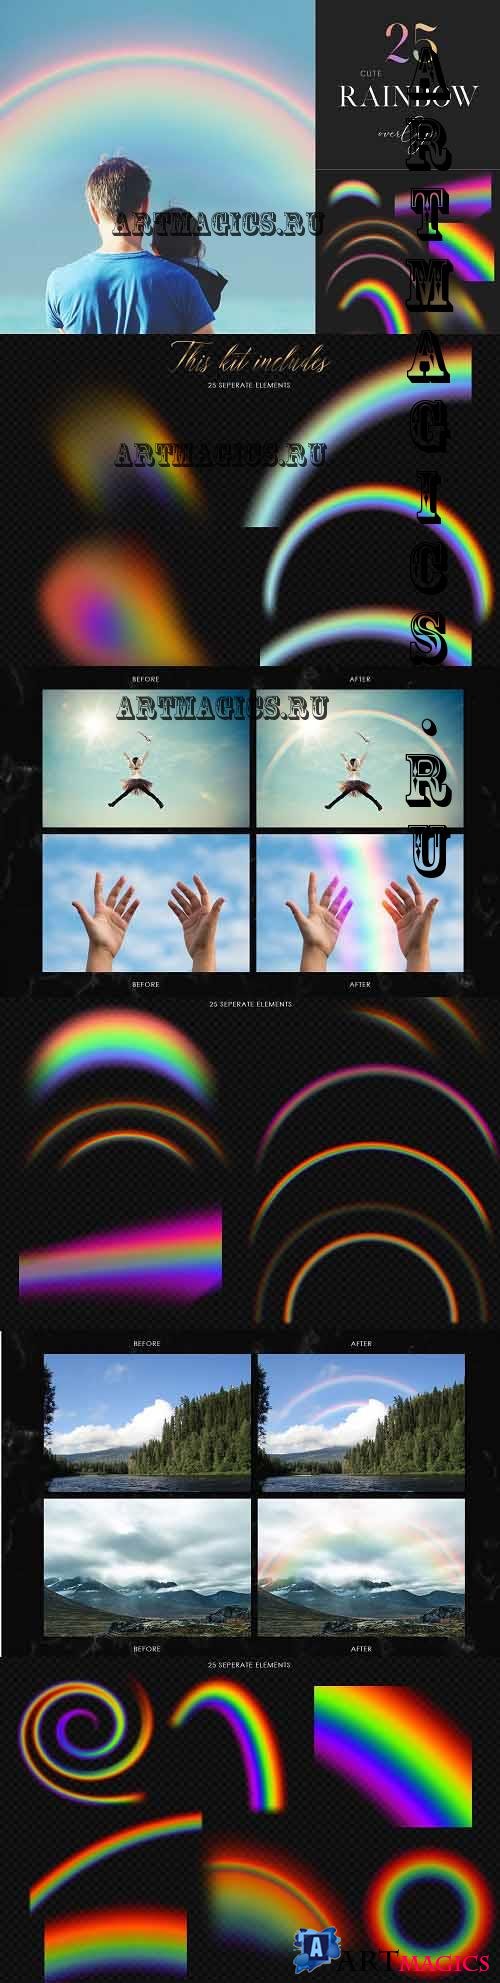 25 Realistic Rainbow Overlays, Rainbow Photo Effects - 1893769